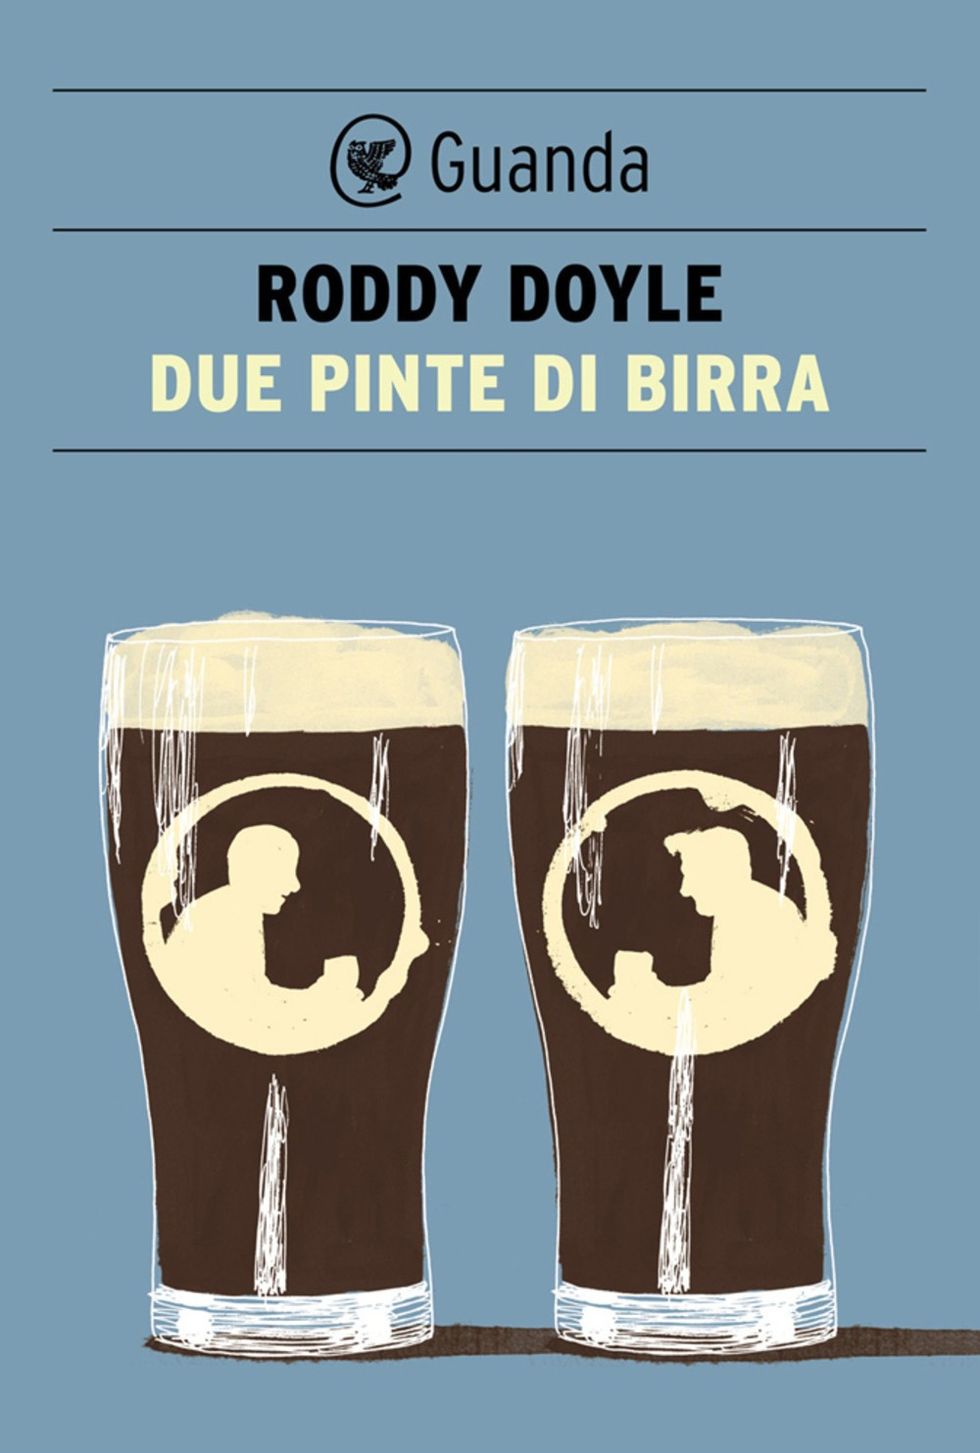 Roddy Doyle: "Due pinte di birra"